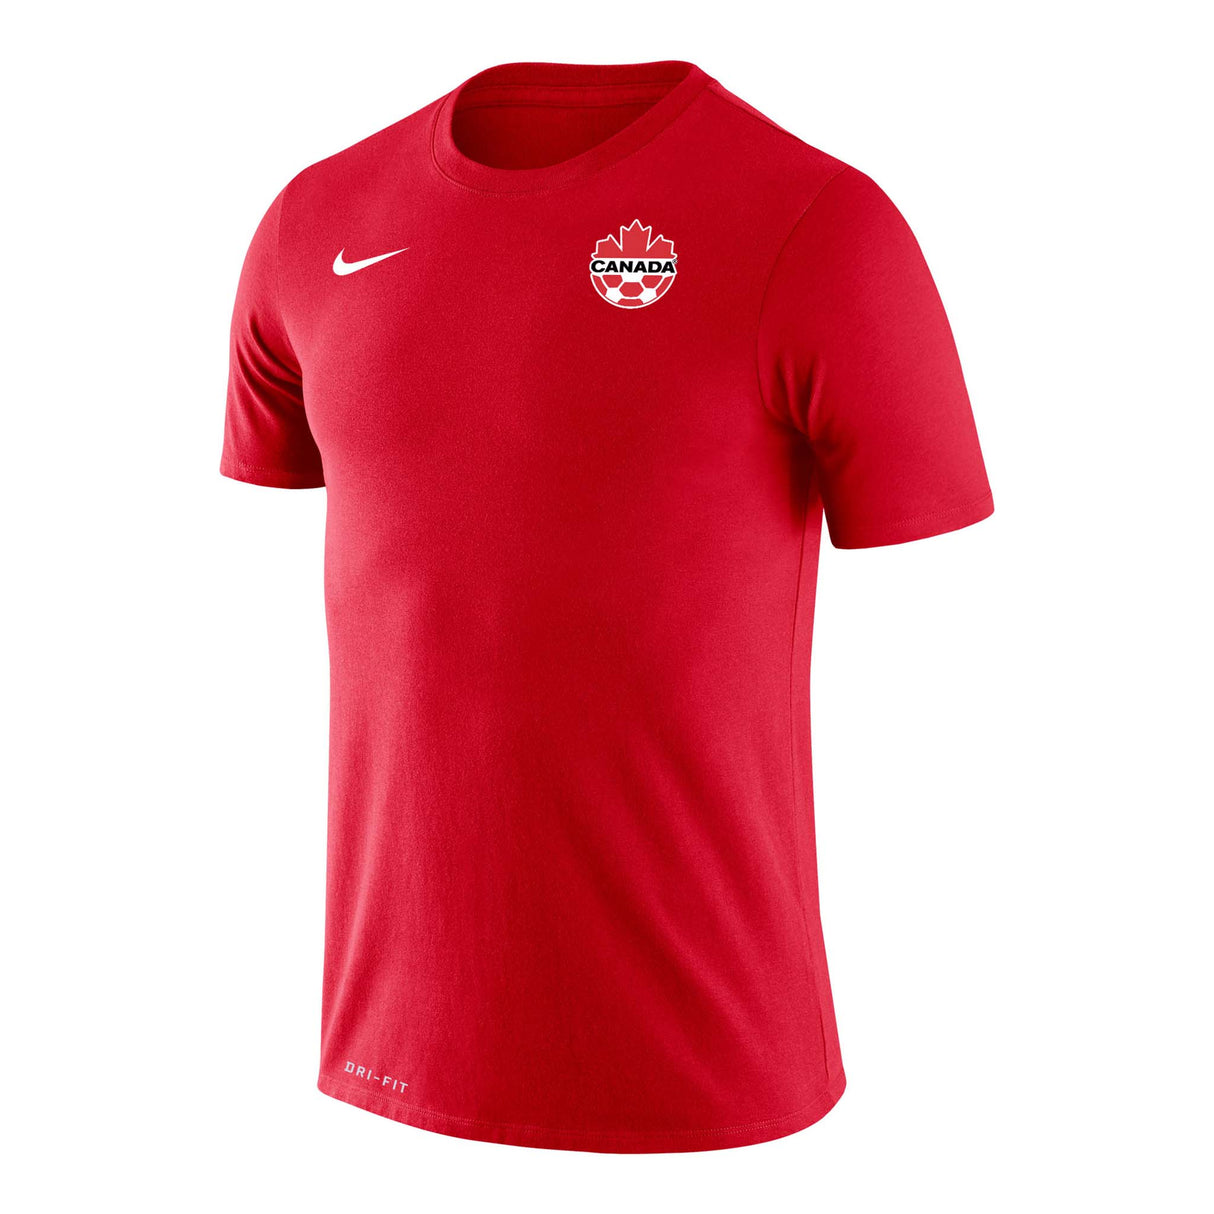 Nike Canada Soccer Jonathan Osorio Legend SS t-shirt de soccer homme devant